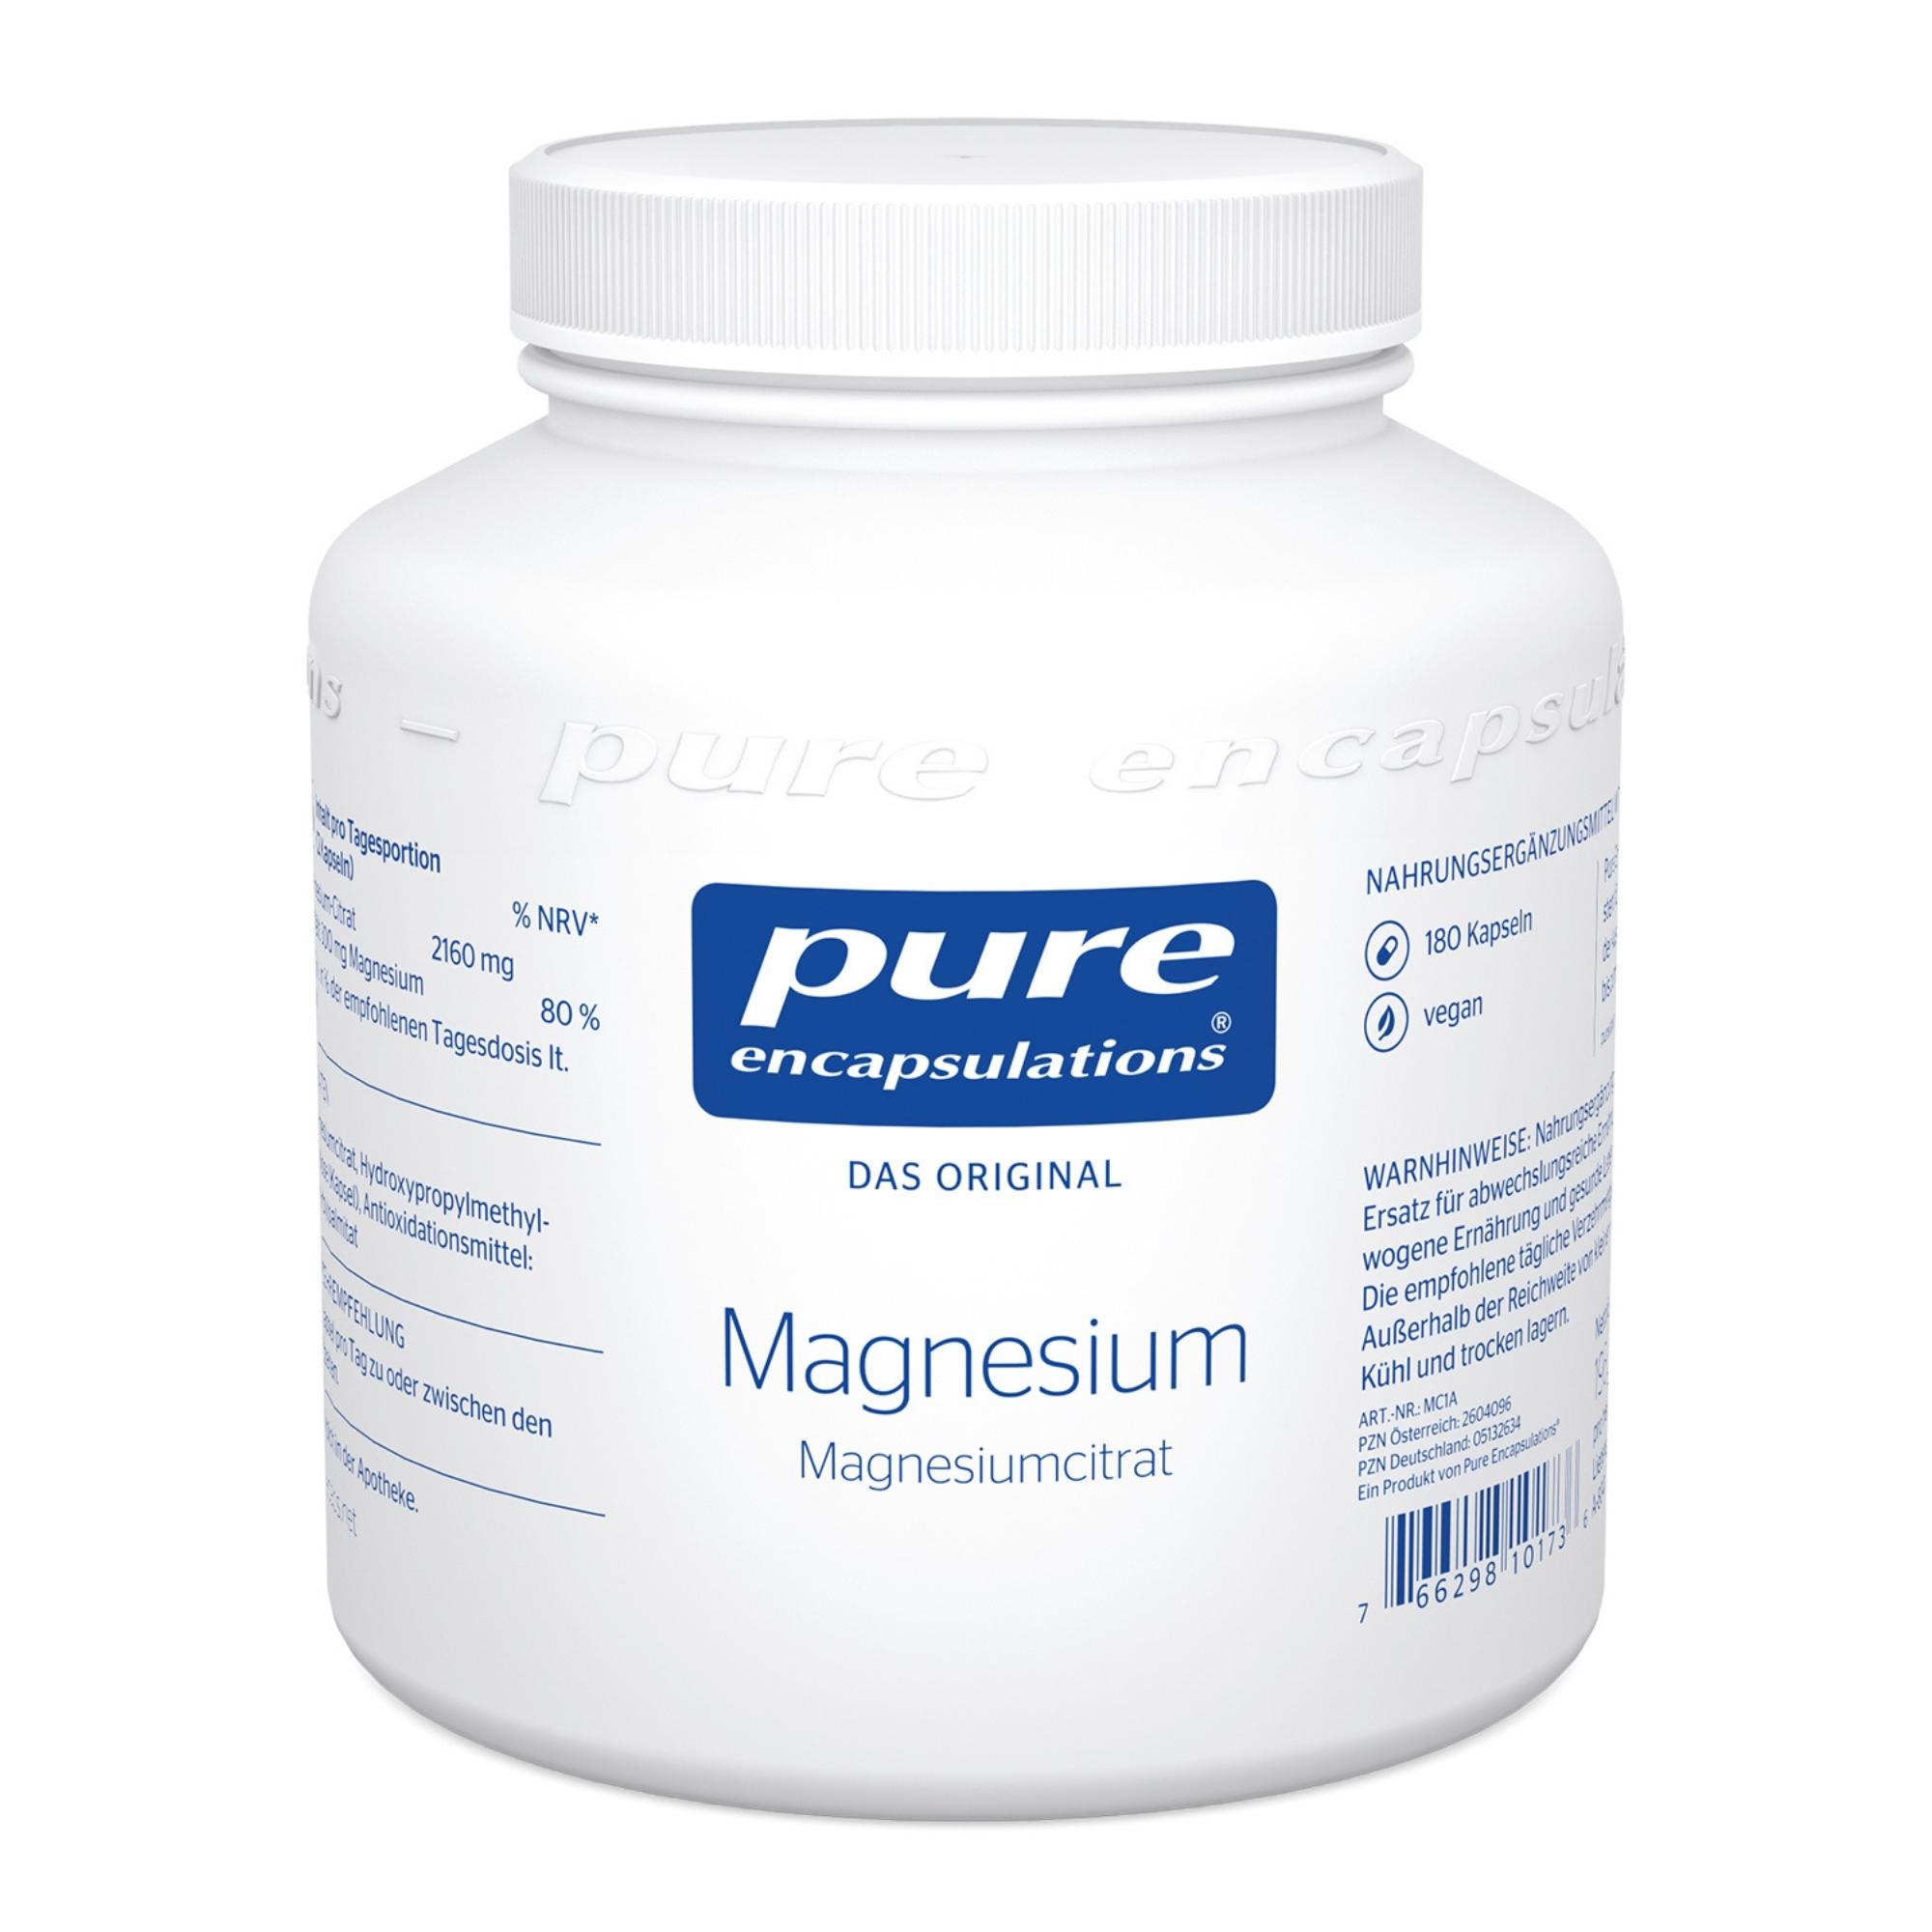 Nahrungsergänzungsmittel mit Magnesiumcitrat.